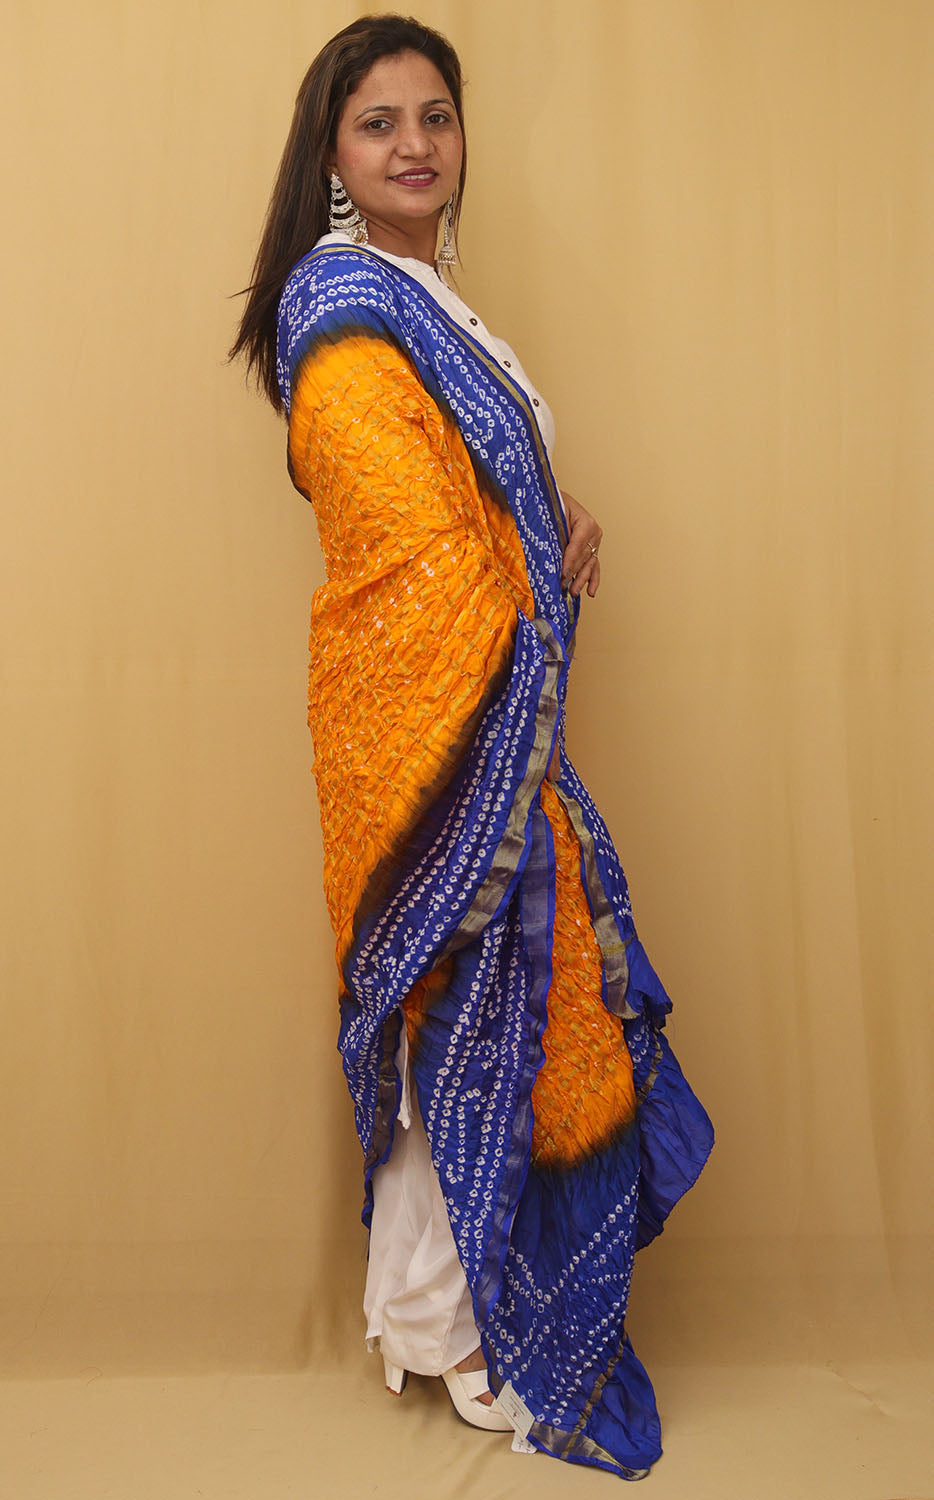 Stylish Blue and Yellow Checks Bandhani Silk Dupatta for Ethnic Look - Luxurion World